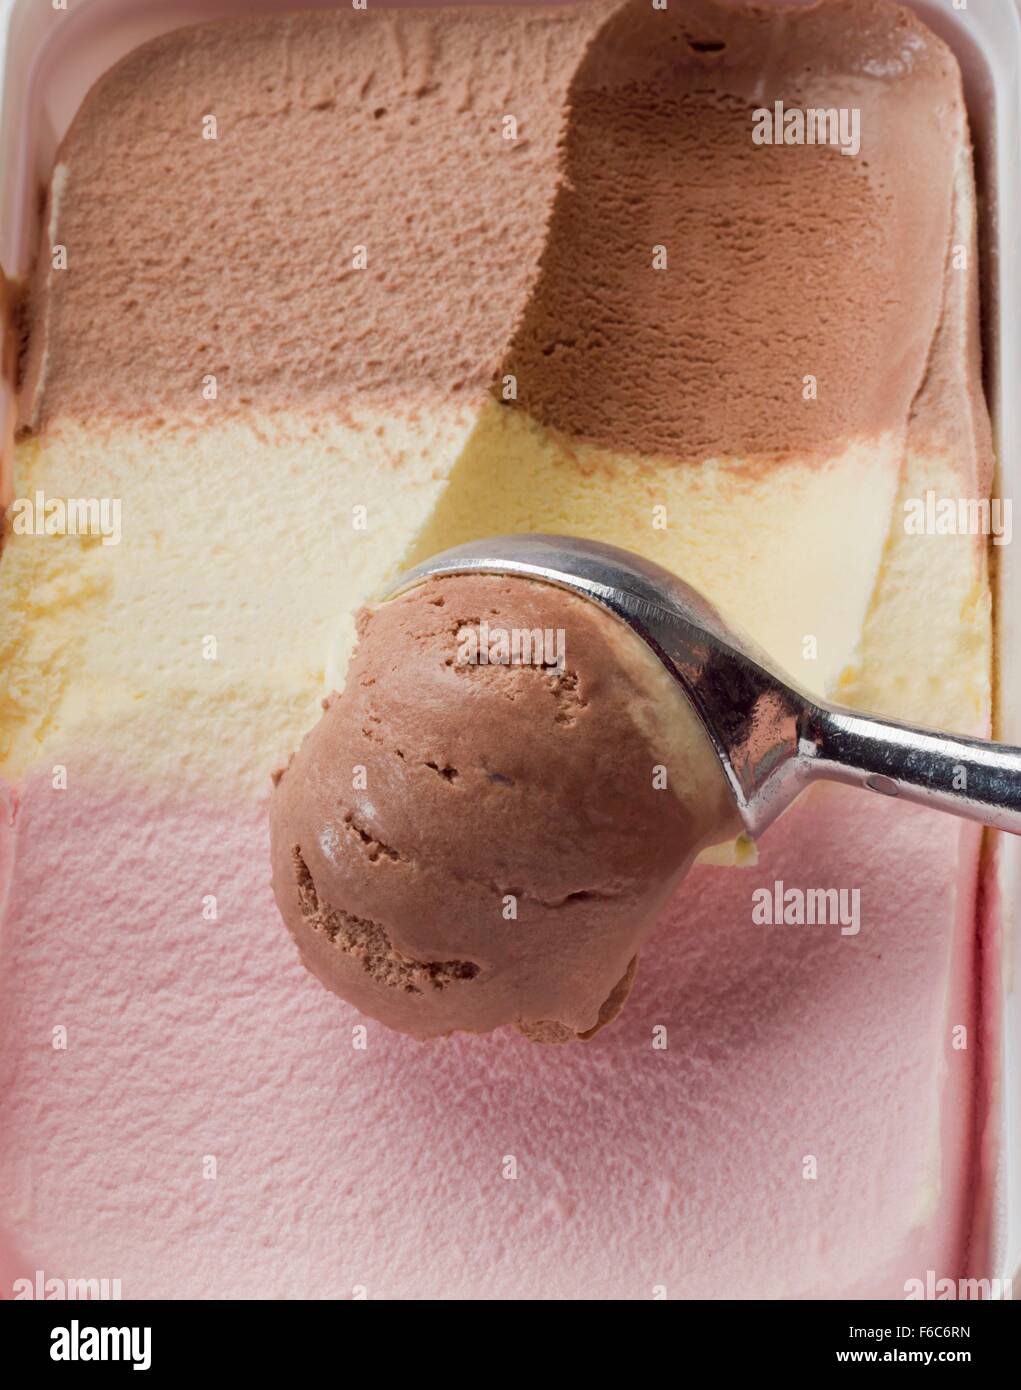 Neapolitan ice cream in a plastic box and an ice cream scoop Stock Photo